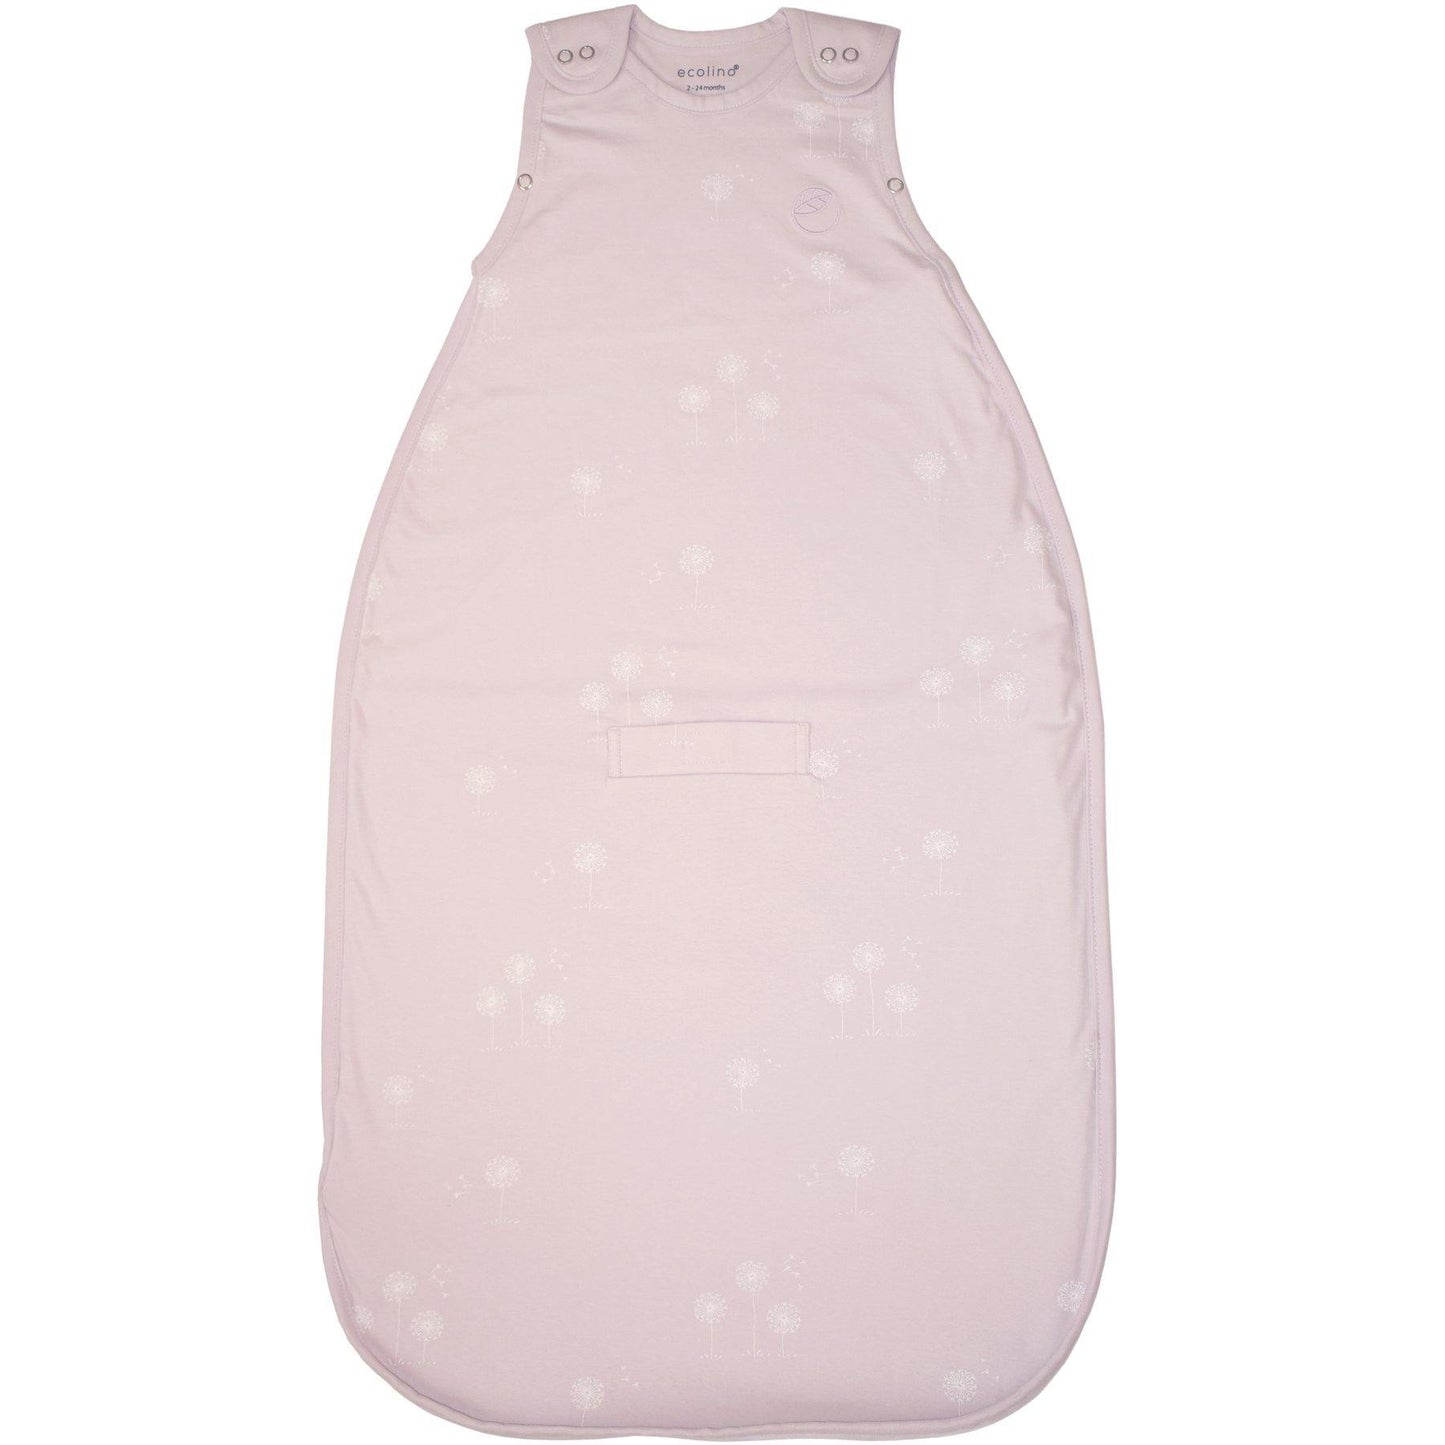 Woolino Ecolino Adjustable Baby Sleep Bag - Organic Cotton - 2M-2Y - Dandelions